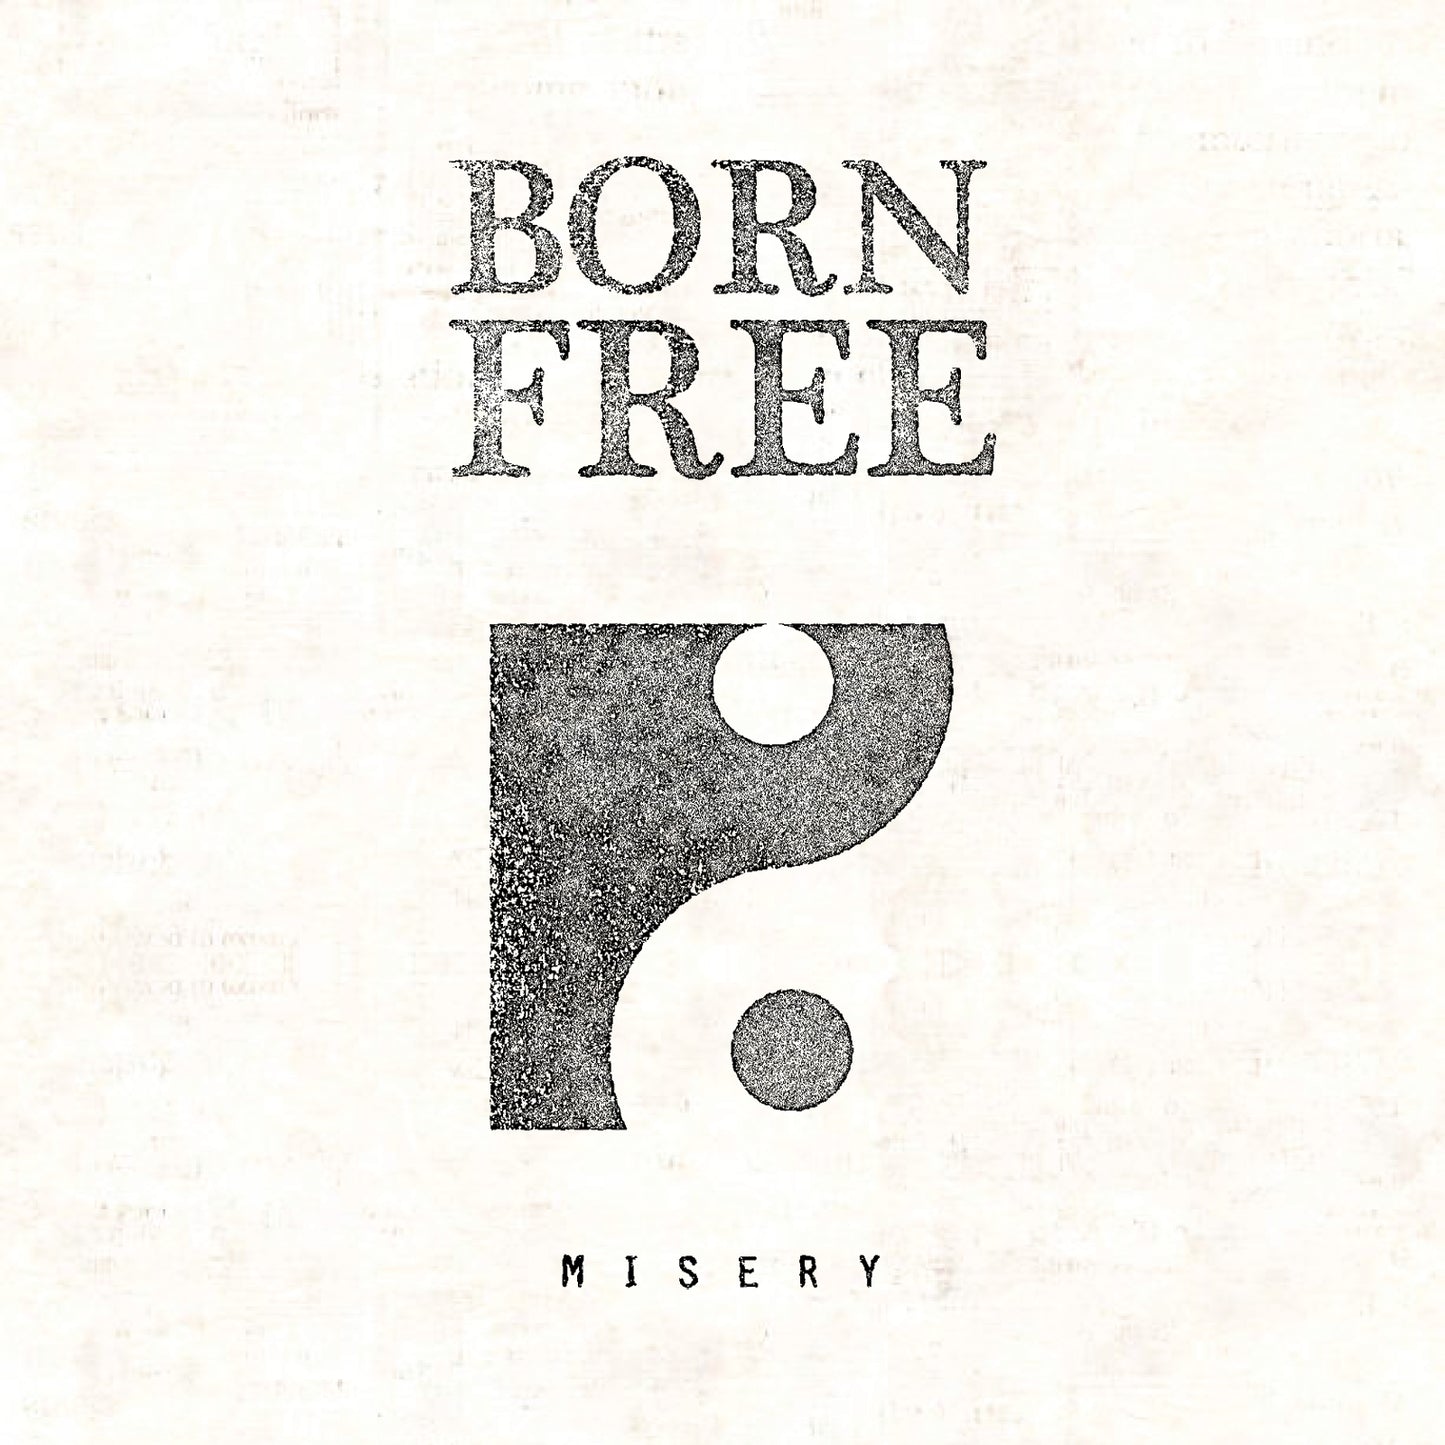 Born Free - Misery Tape